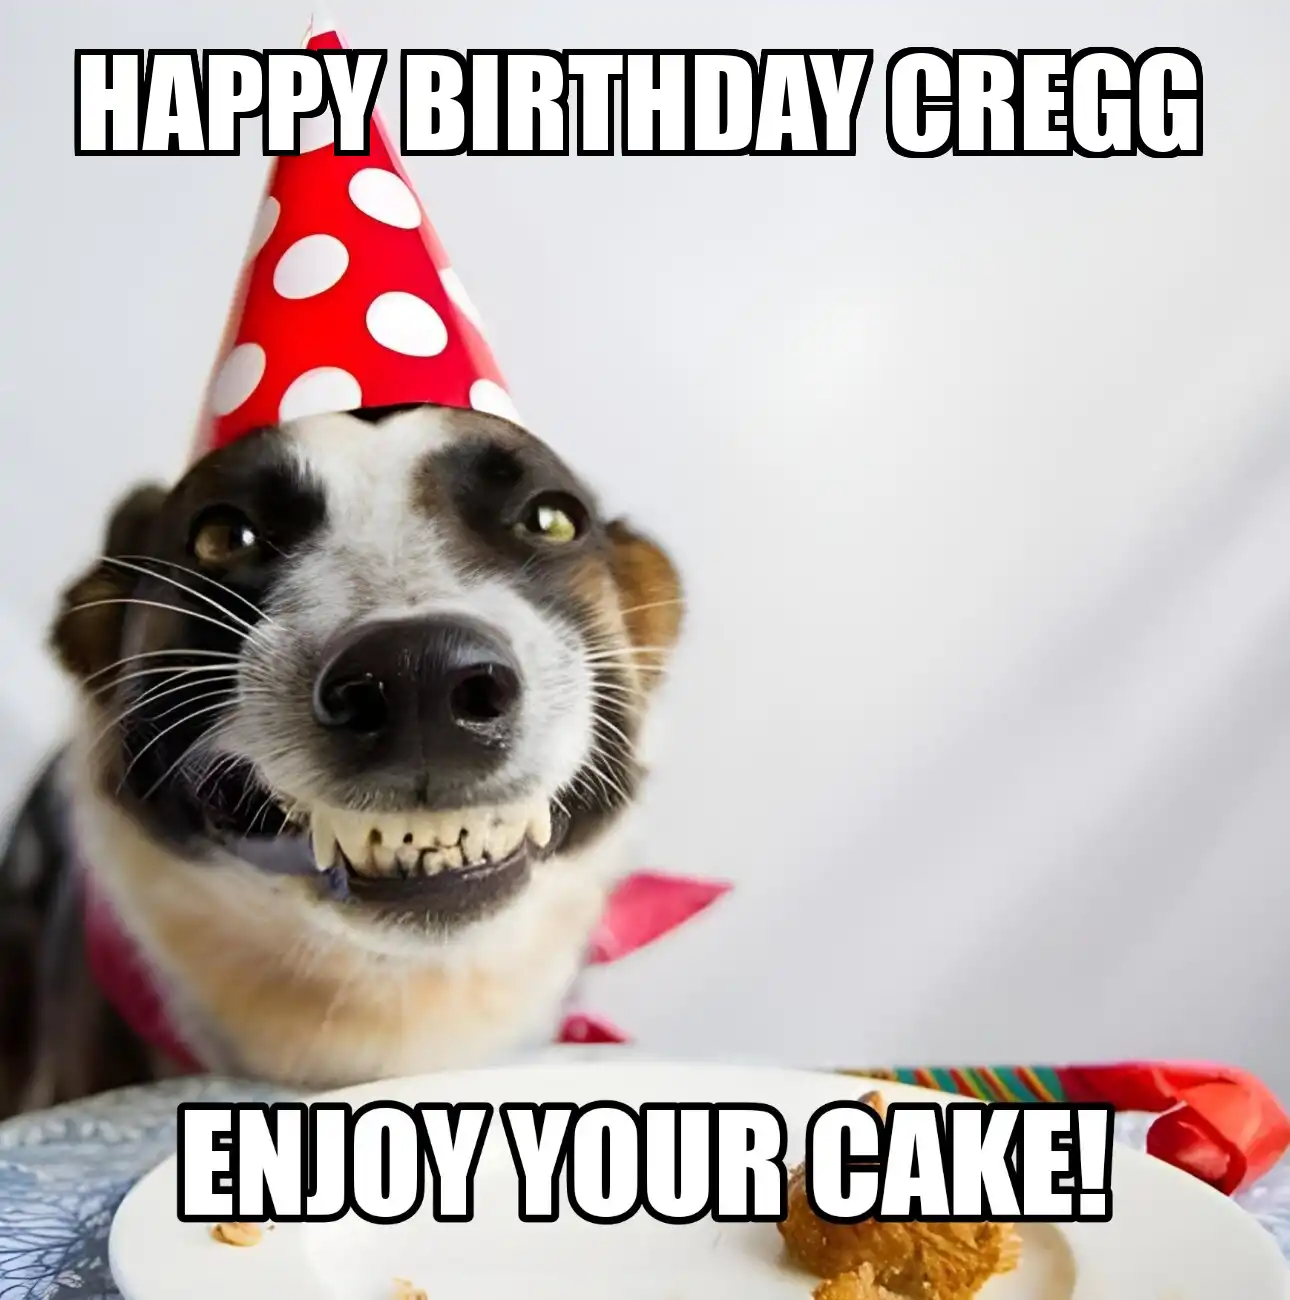 Happy Birthday Cregg Enjoy Your Cake Dog Meme